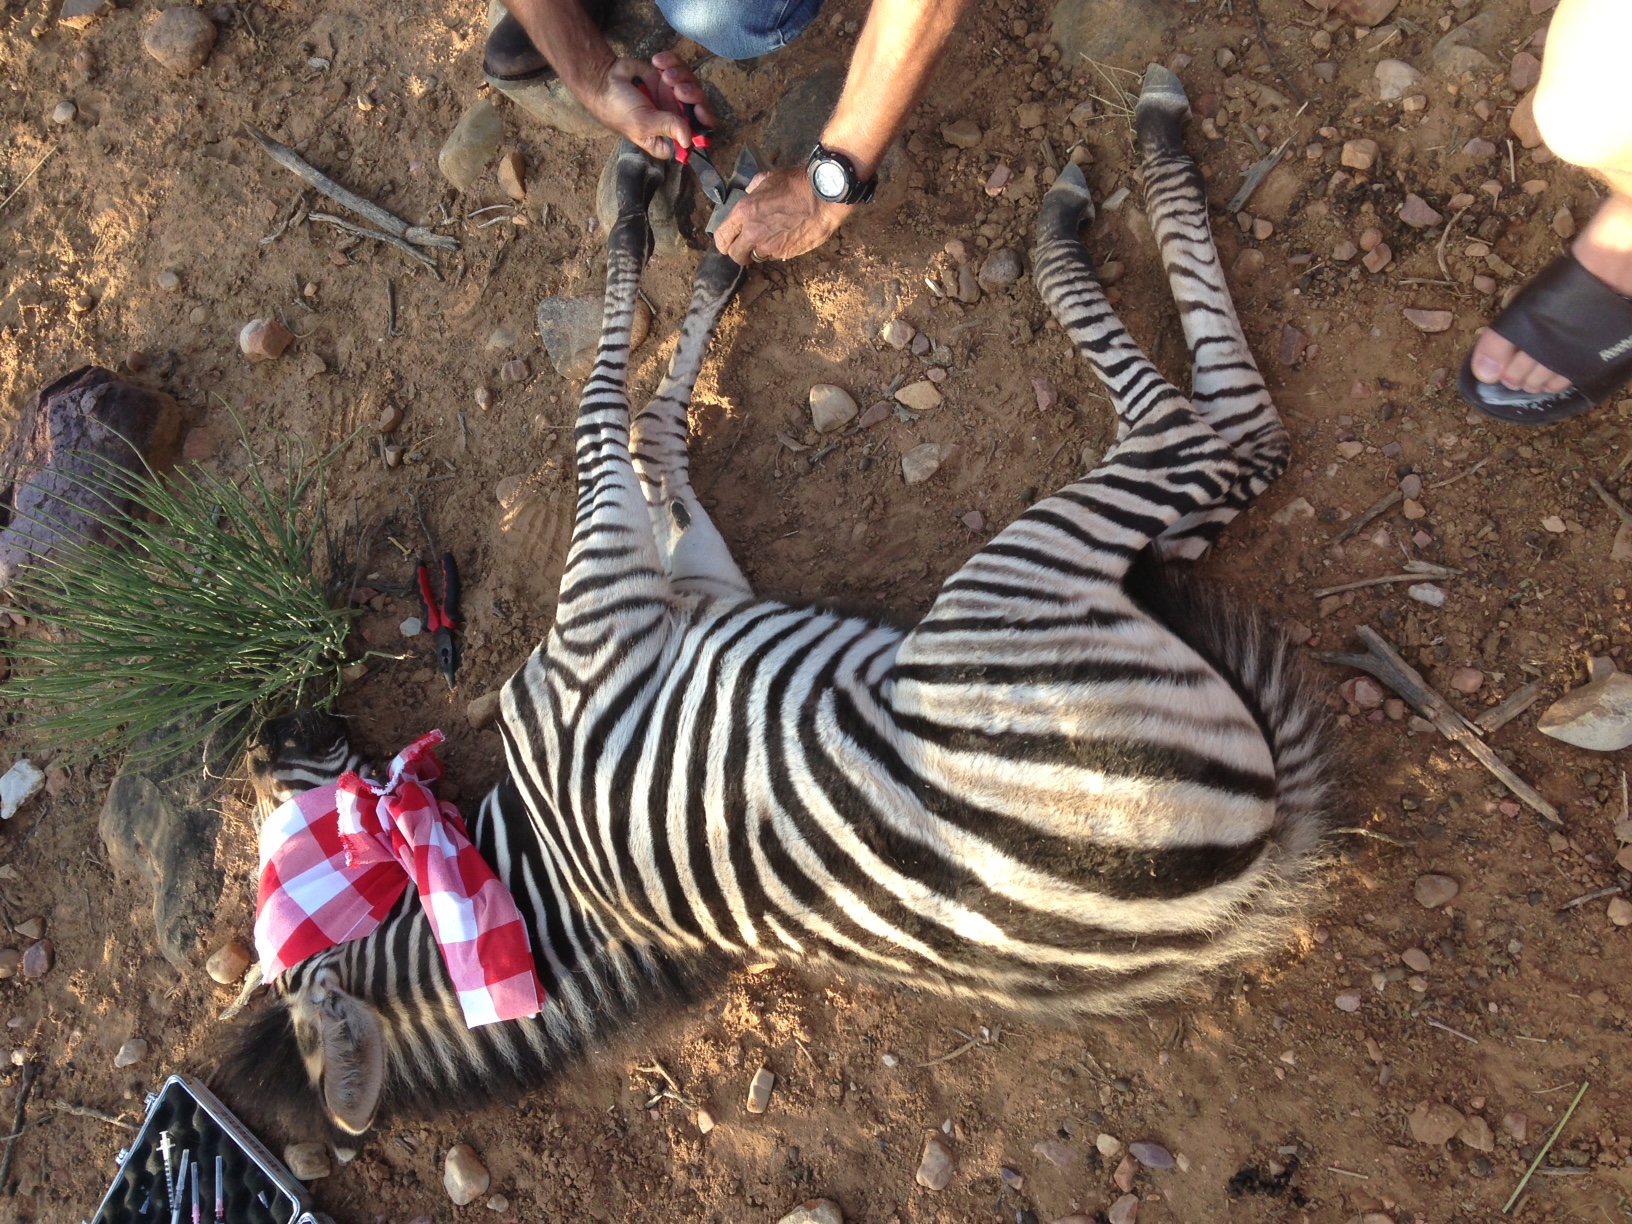 A vet trims a sedated zebra's hooves